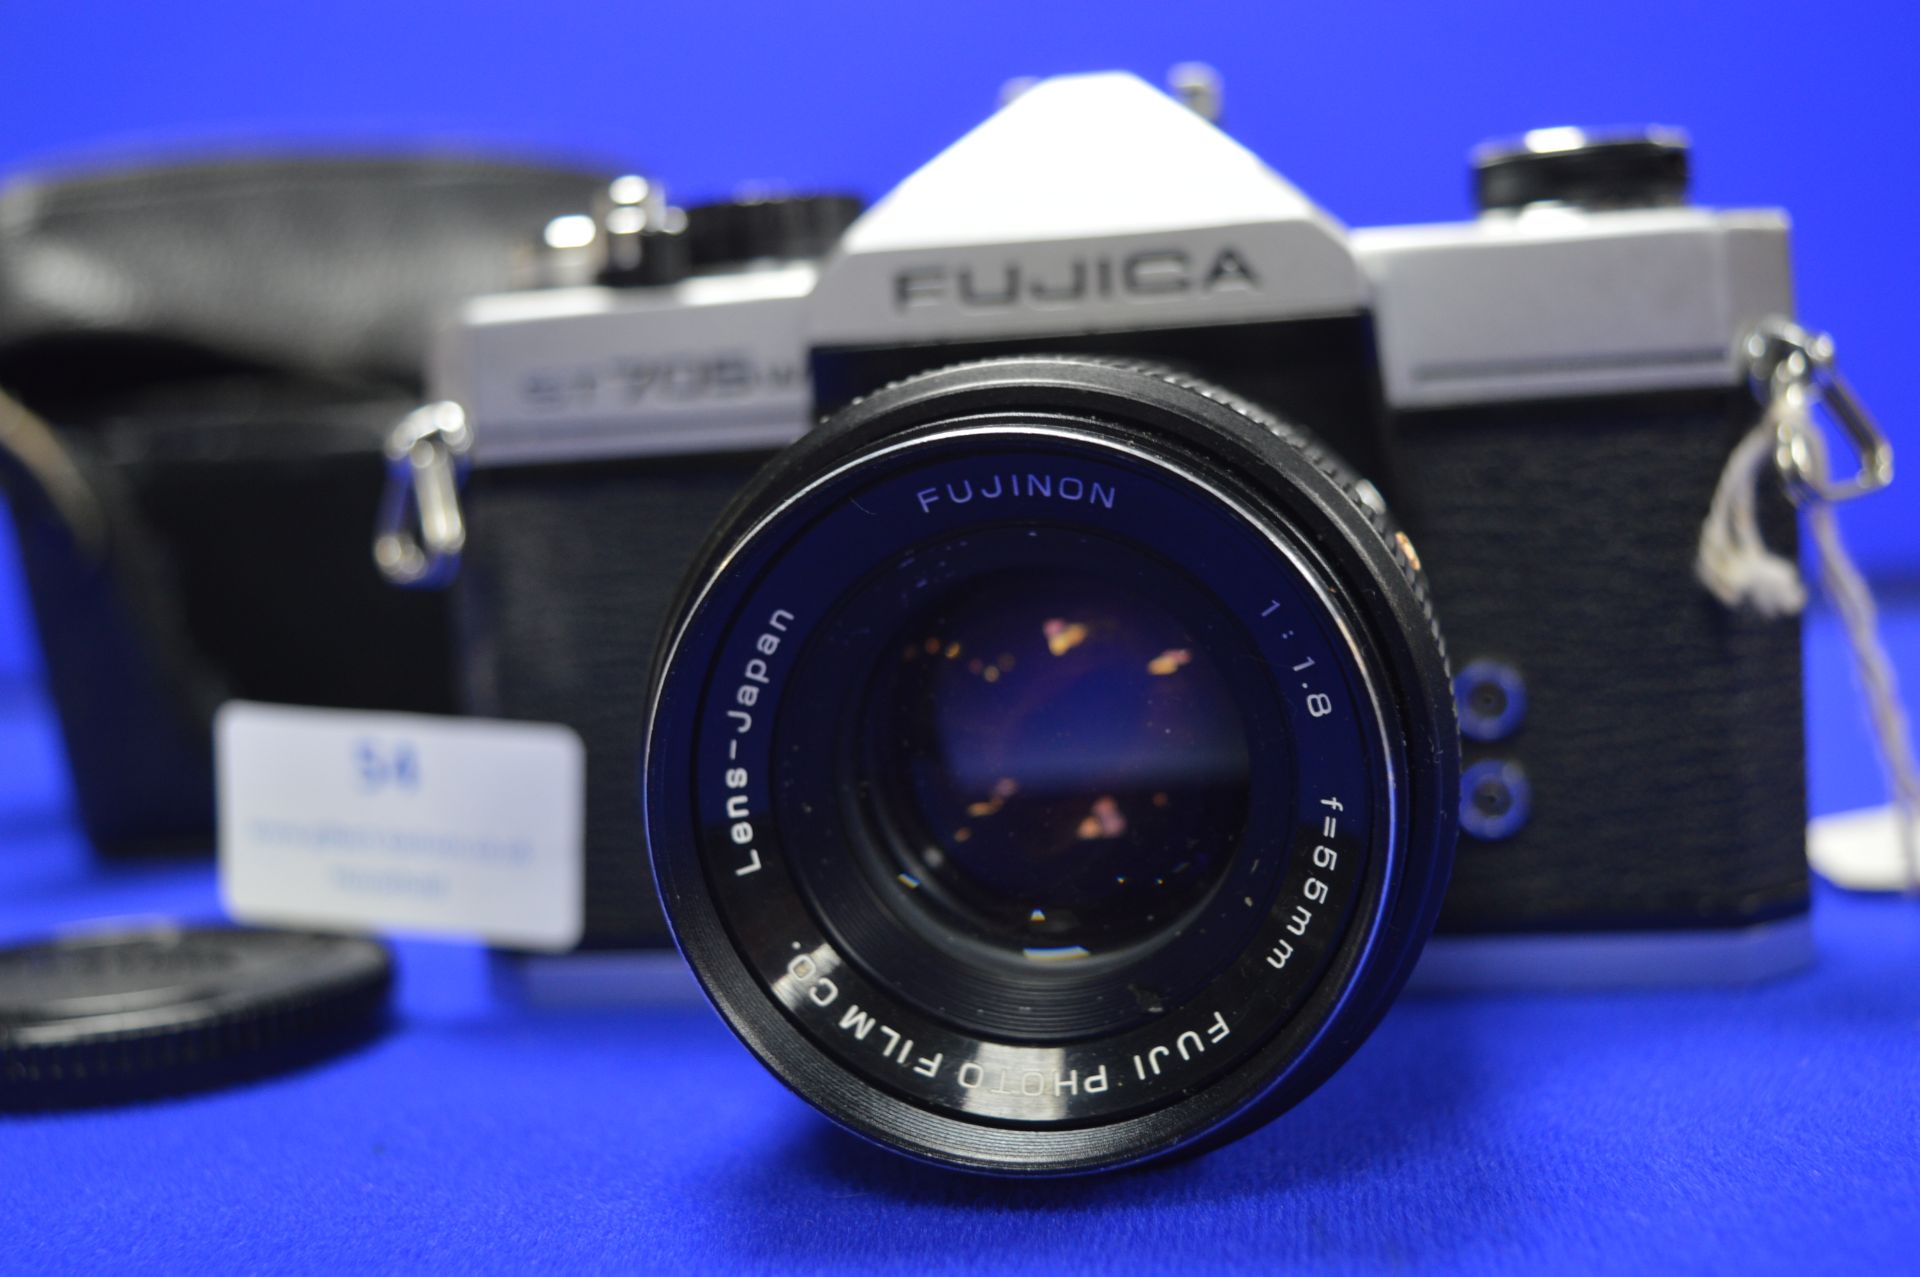 Fujica ST705W SLR Camera with Jujinon 1:1.8 55mm Lens - Image 2 of 2